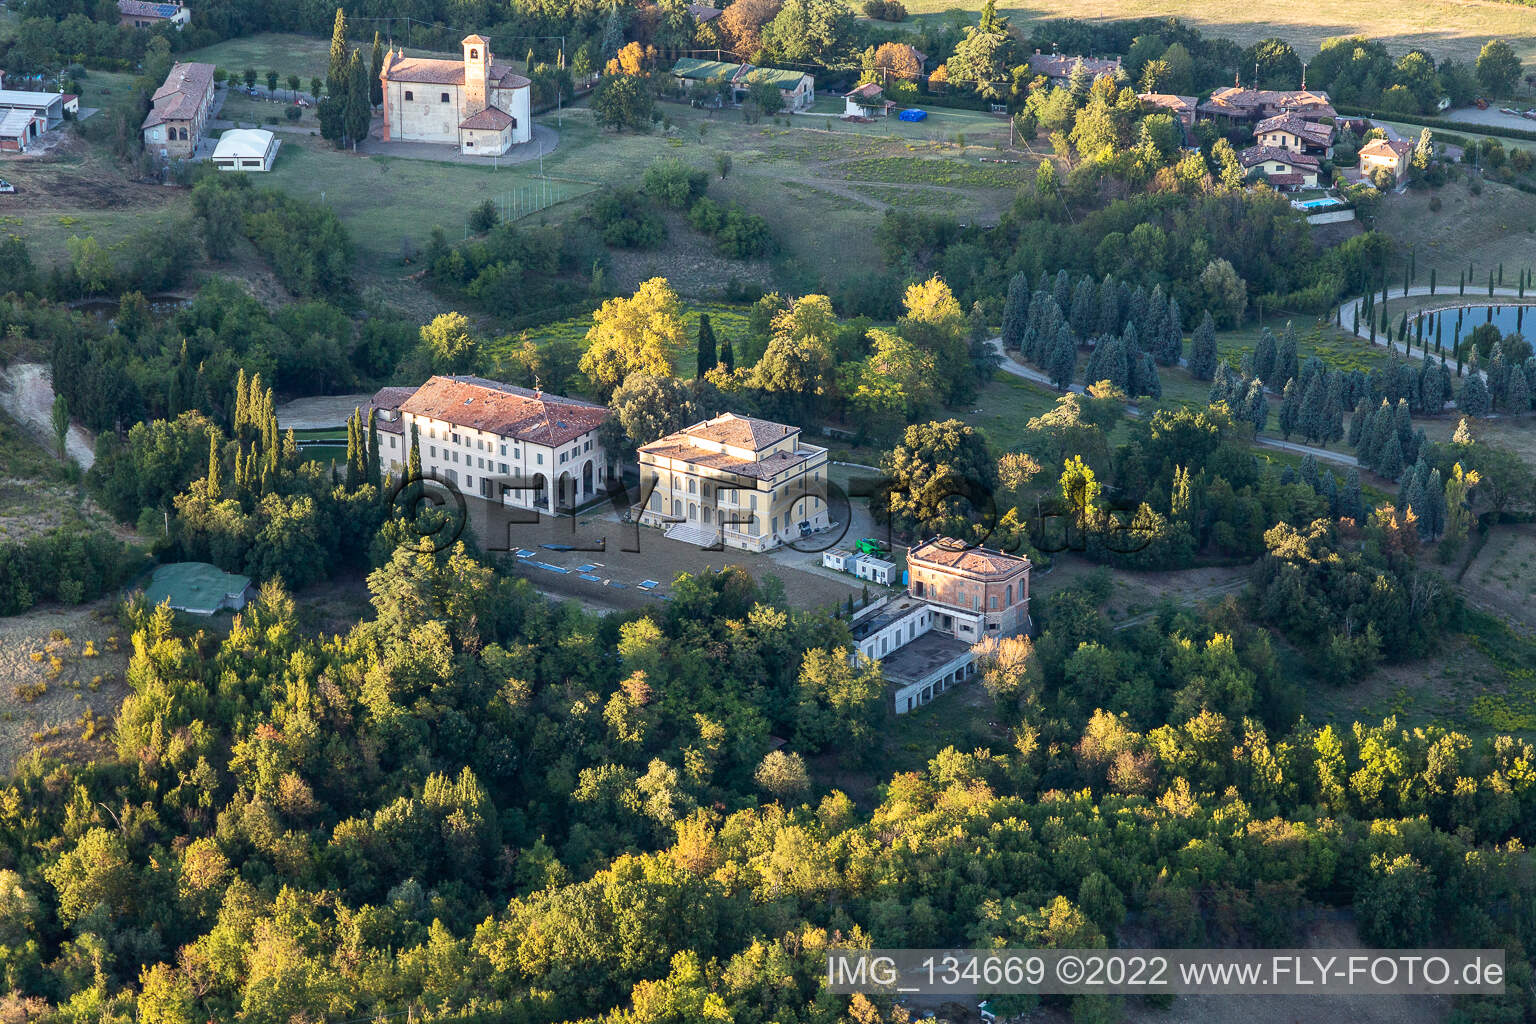 Luftbild von Casalgrande im Bundesland Reggio Emilia, Italien